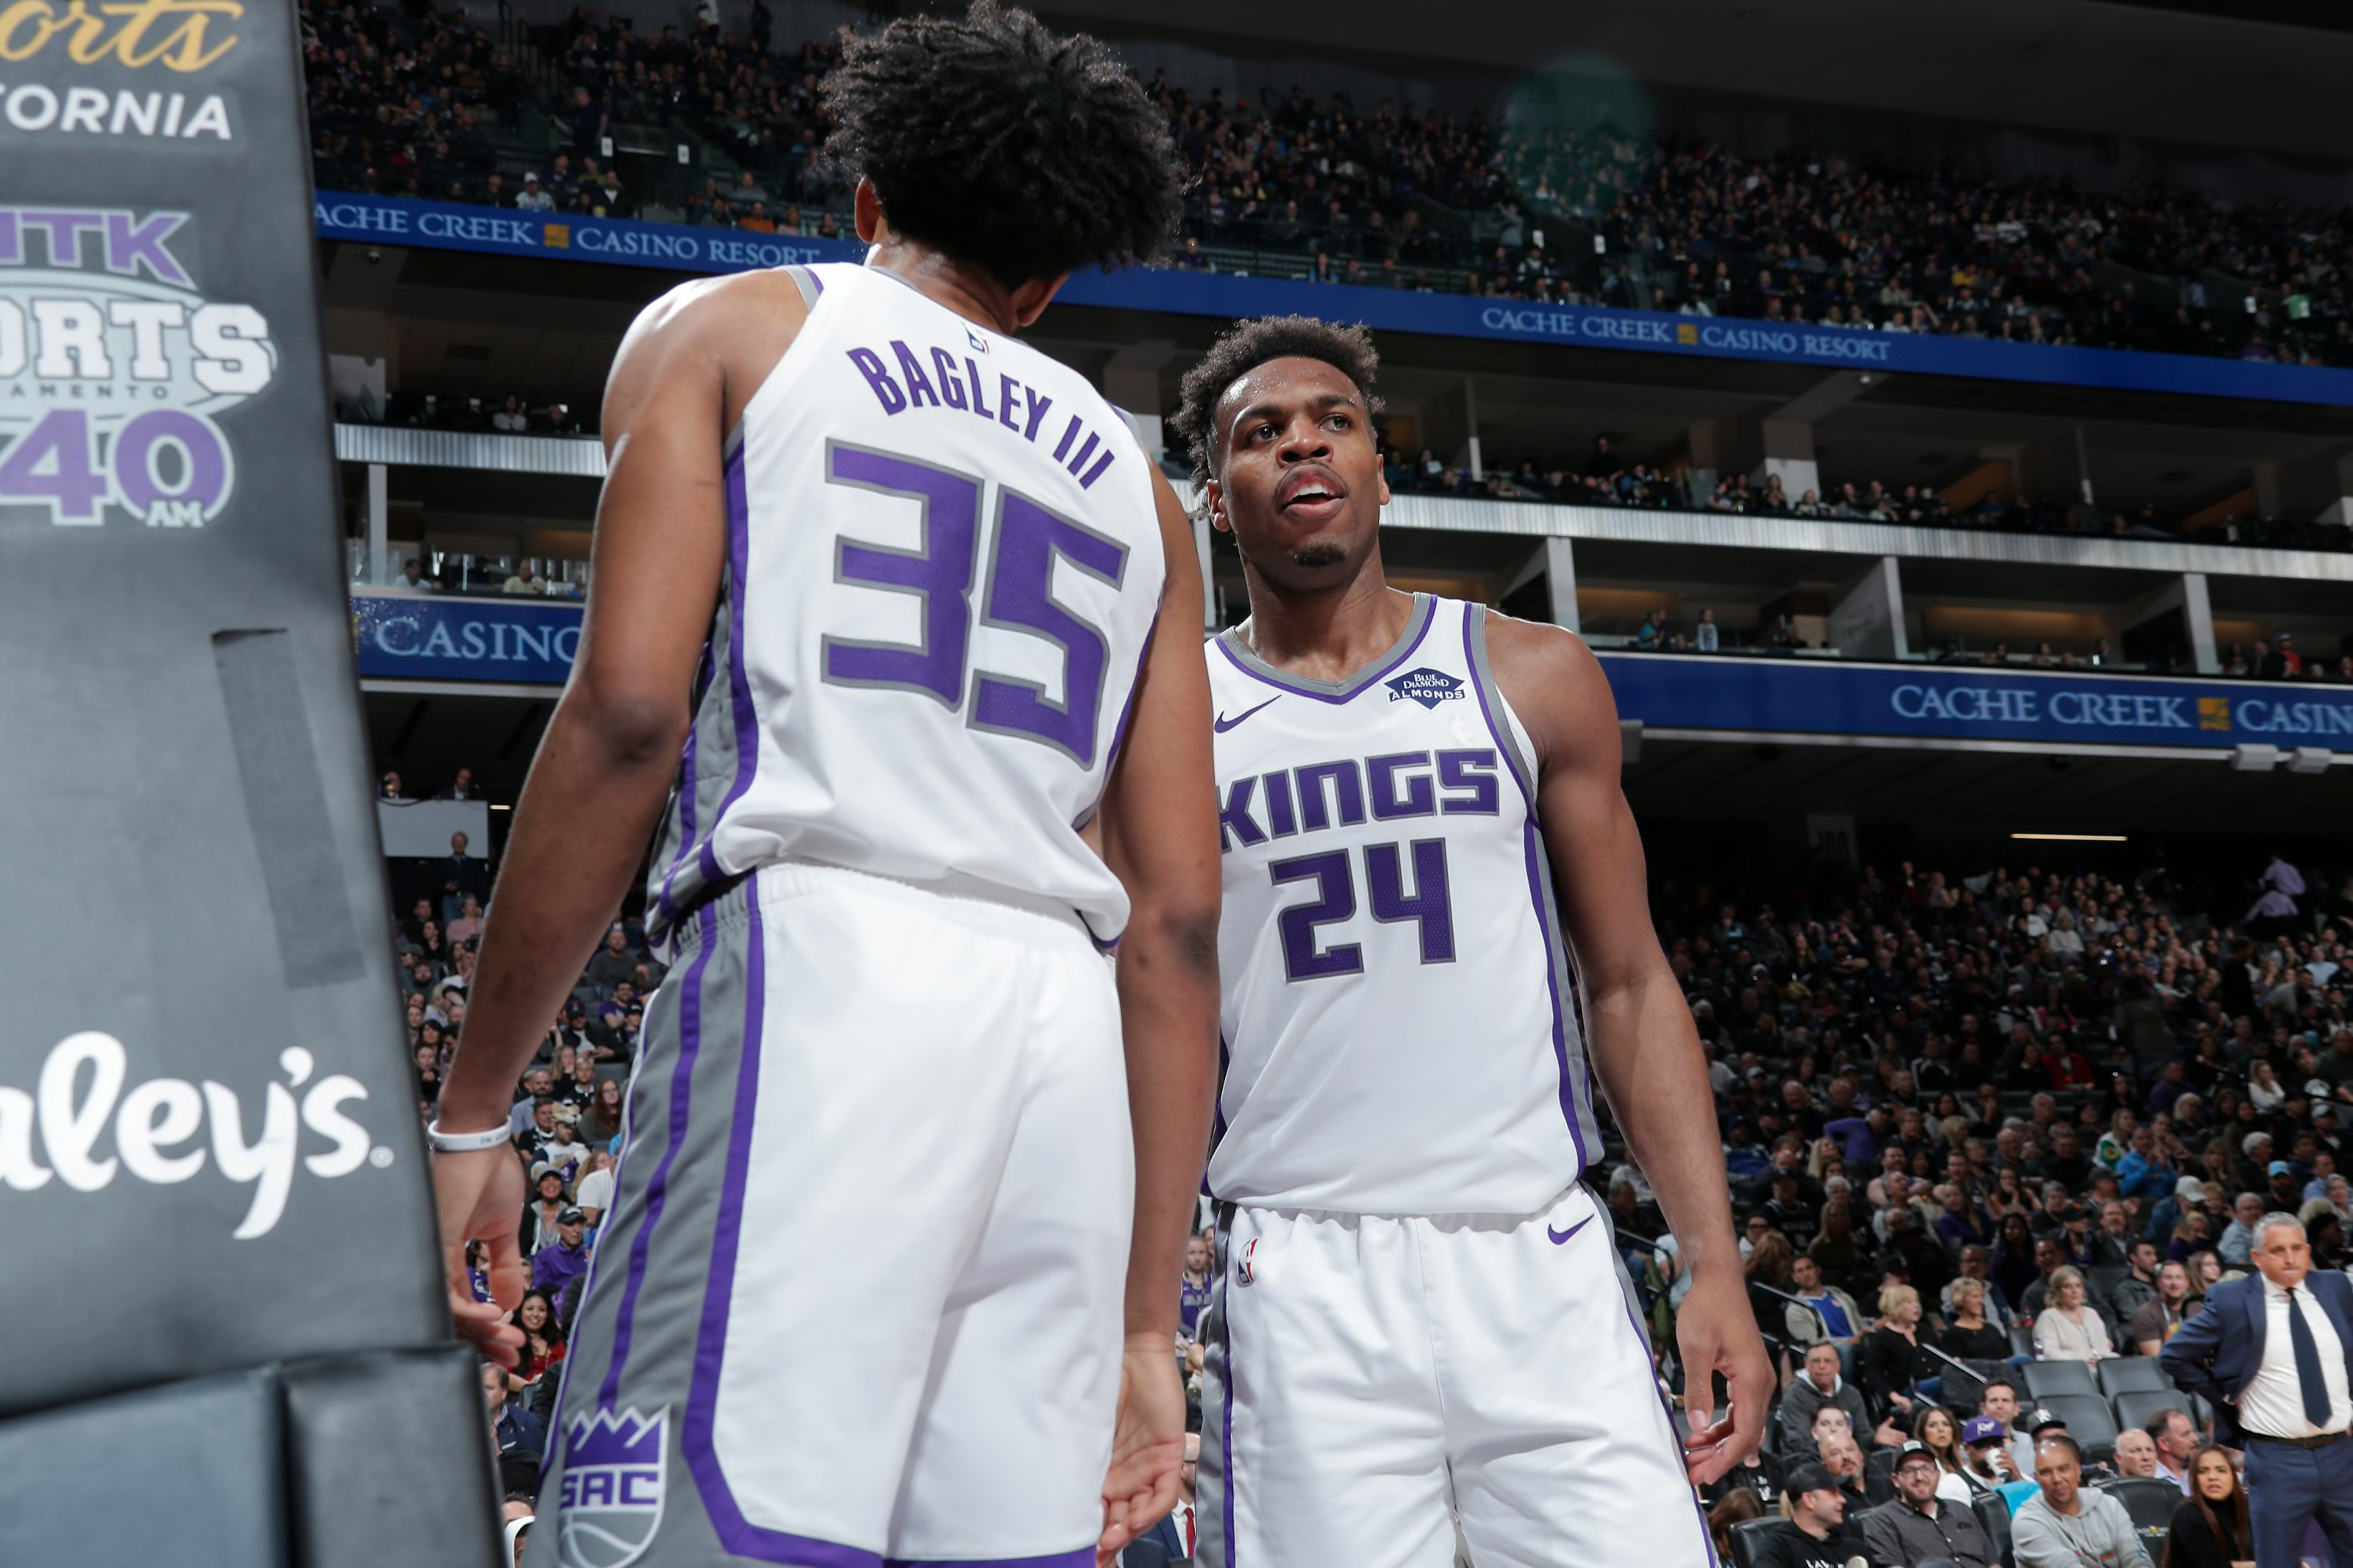 How Deep Are The Sacramento Kings For The 2019-20 Season?